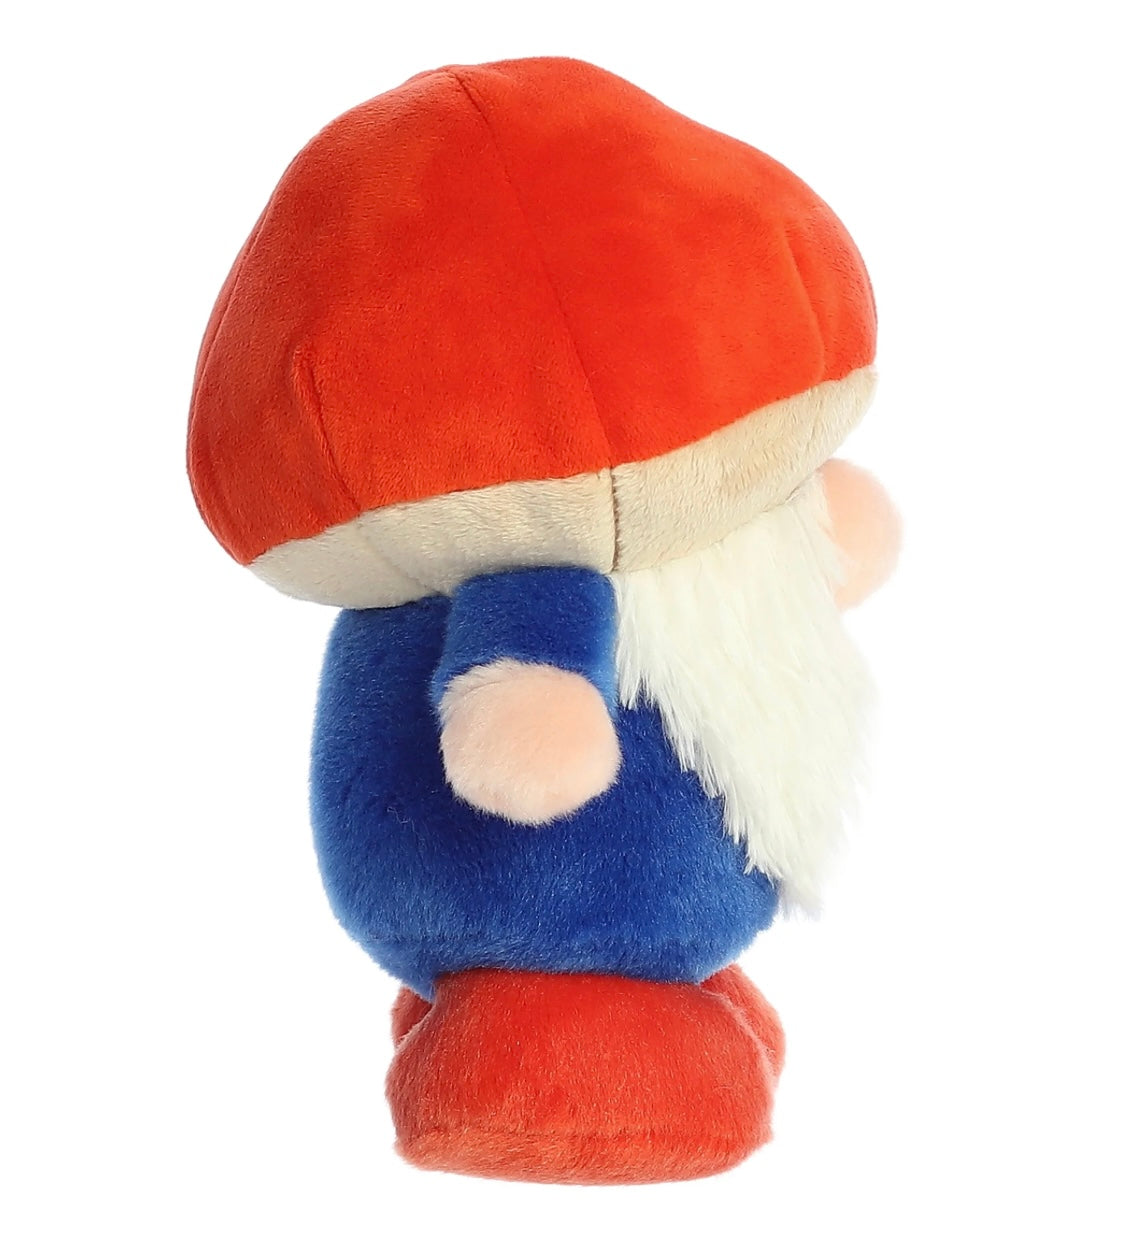 The Gnomlinis Mushroom Gnome